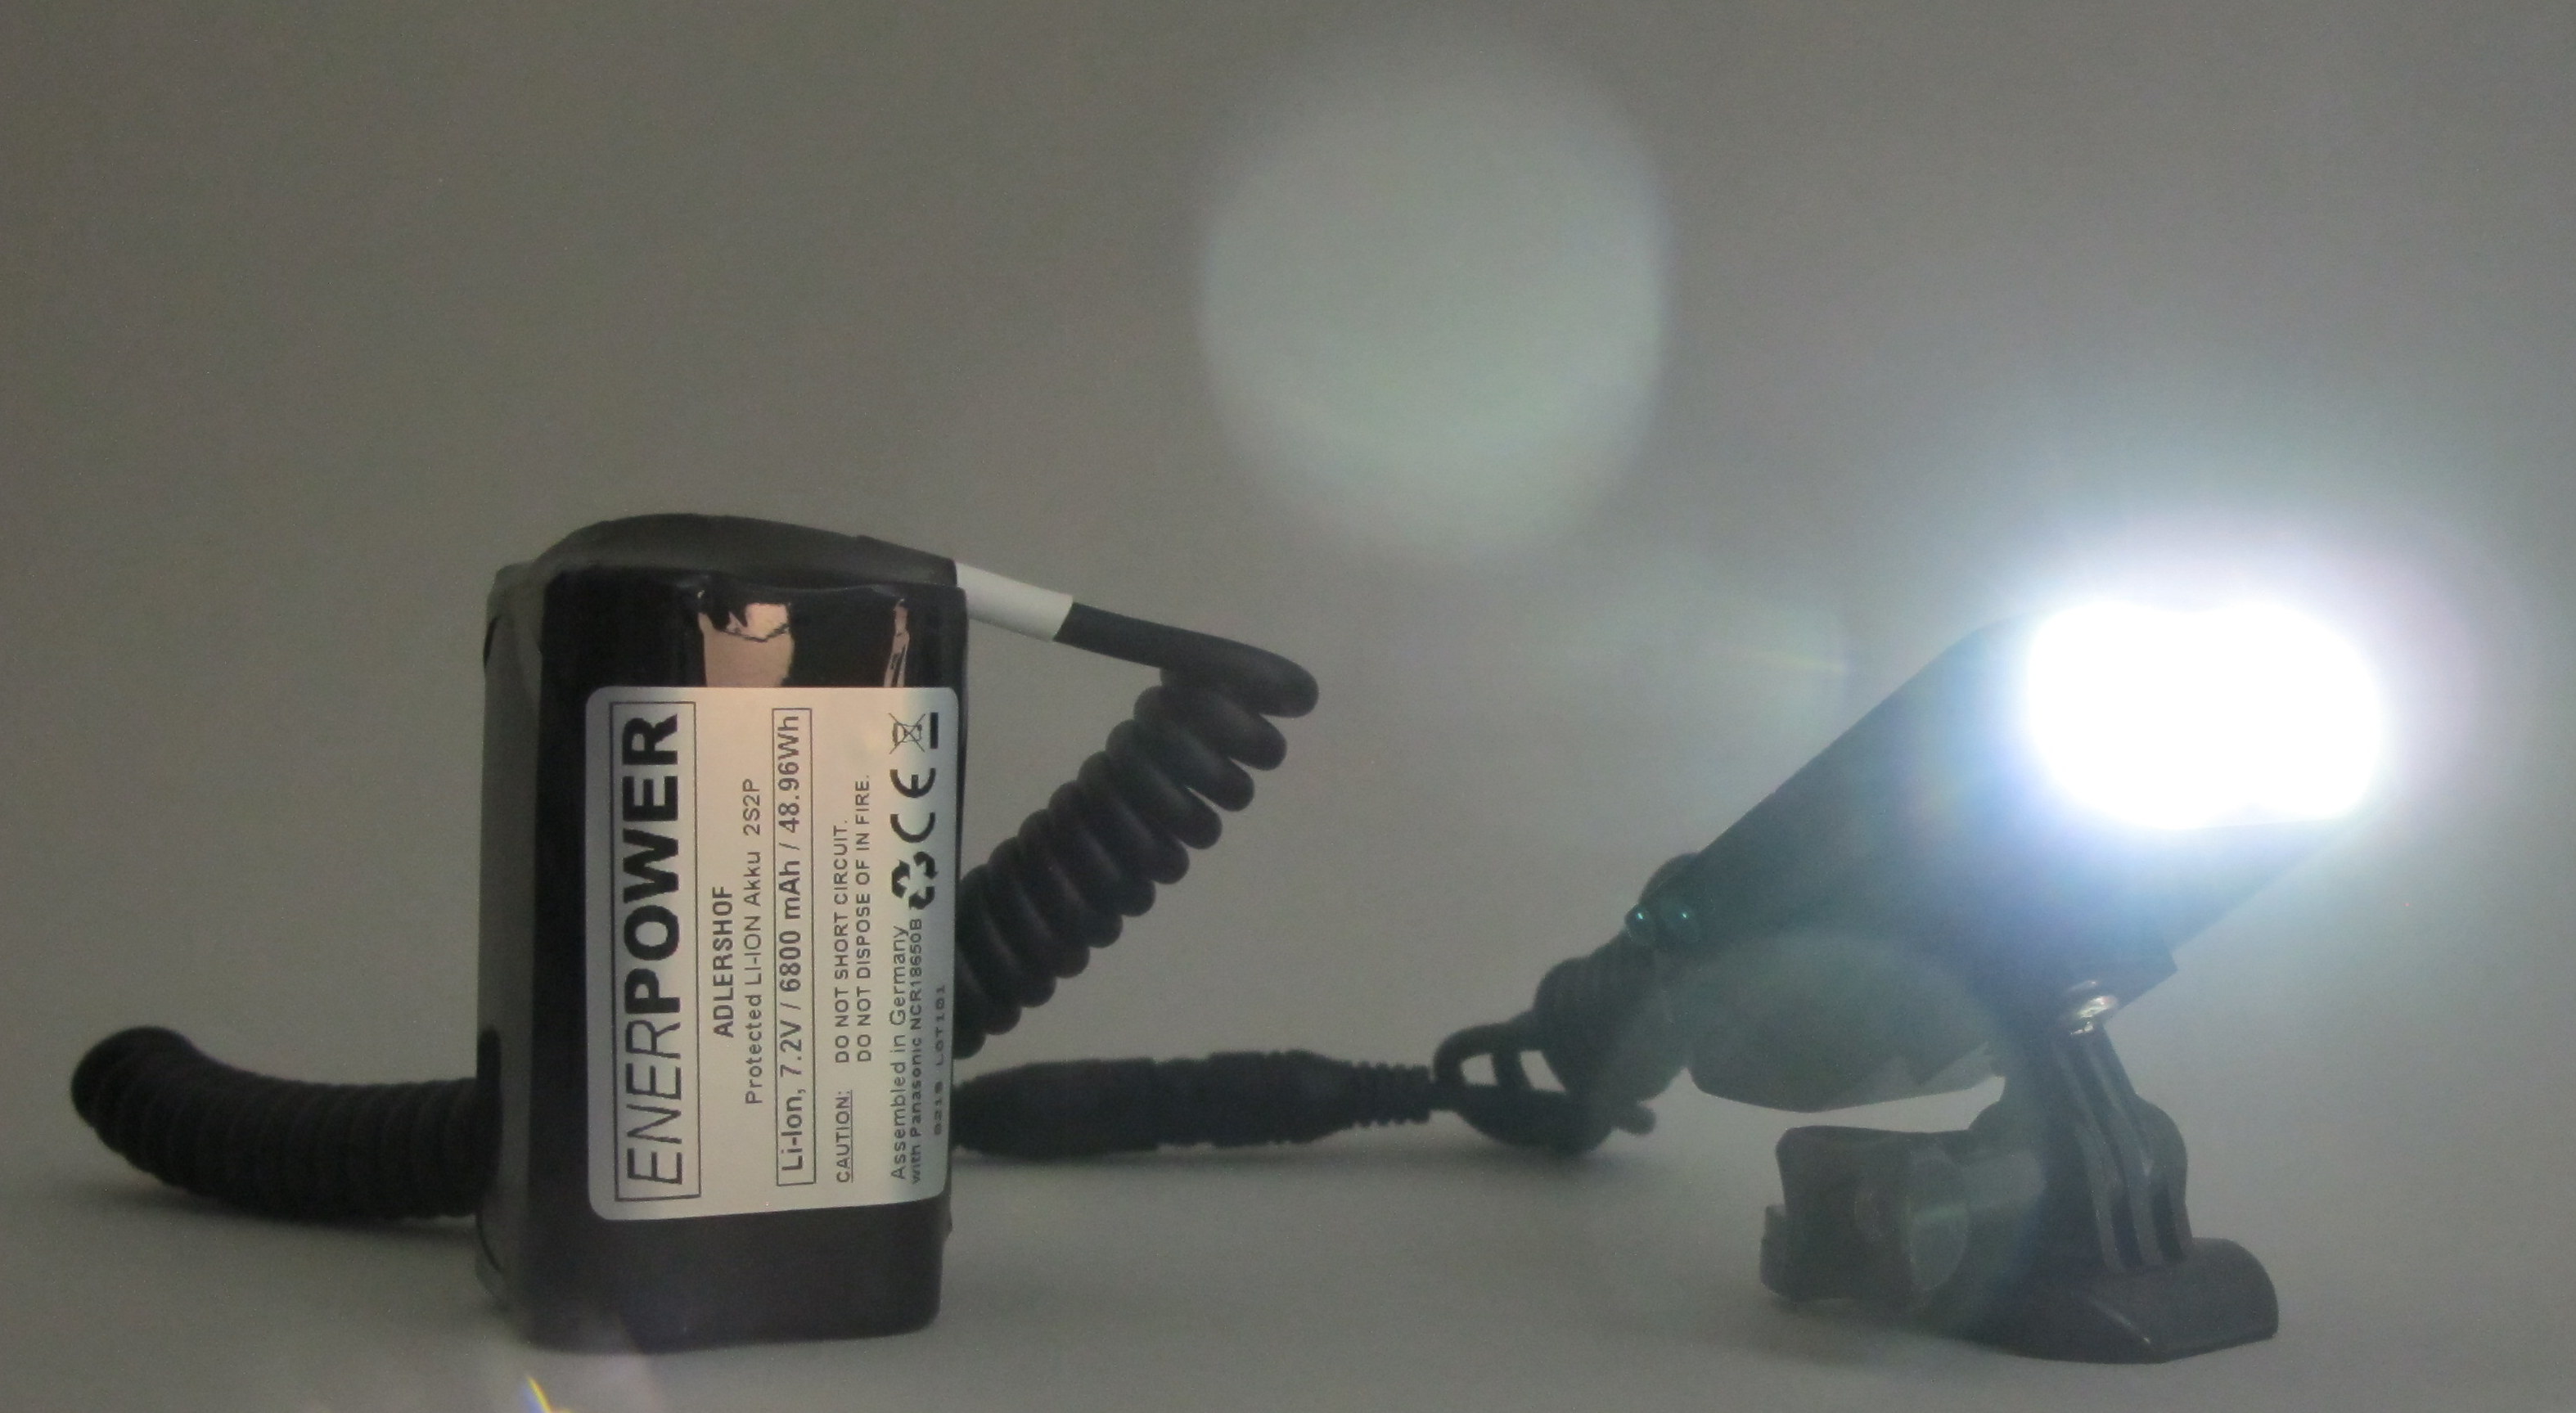 Enerpower HAWK 2 CREE XM-L U2 Helmlampe 2200 Lumen GoPro Version